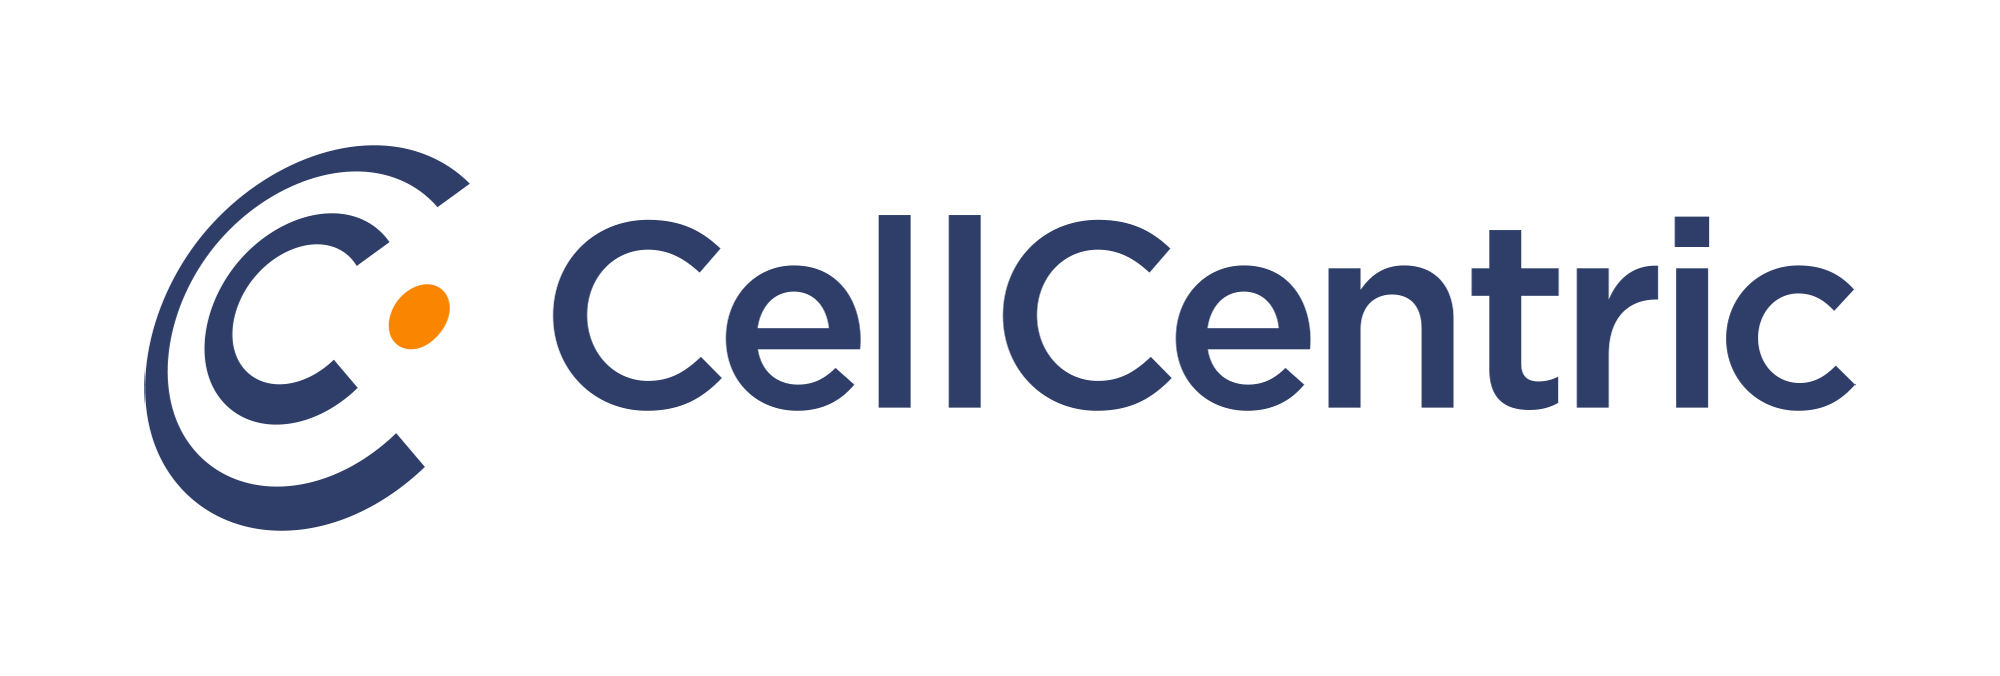 CellCentric_Logo_RGB.png